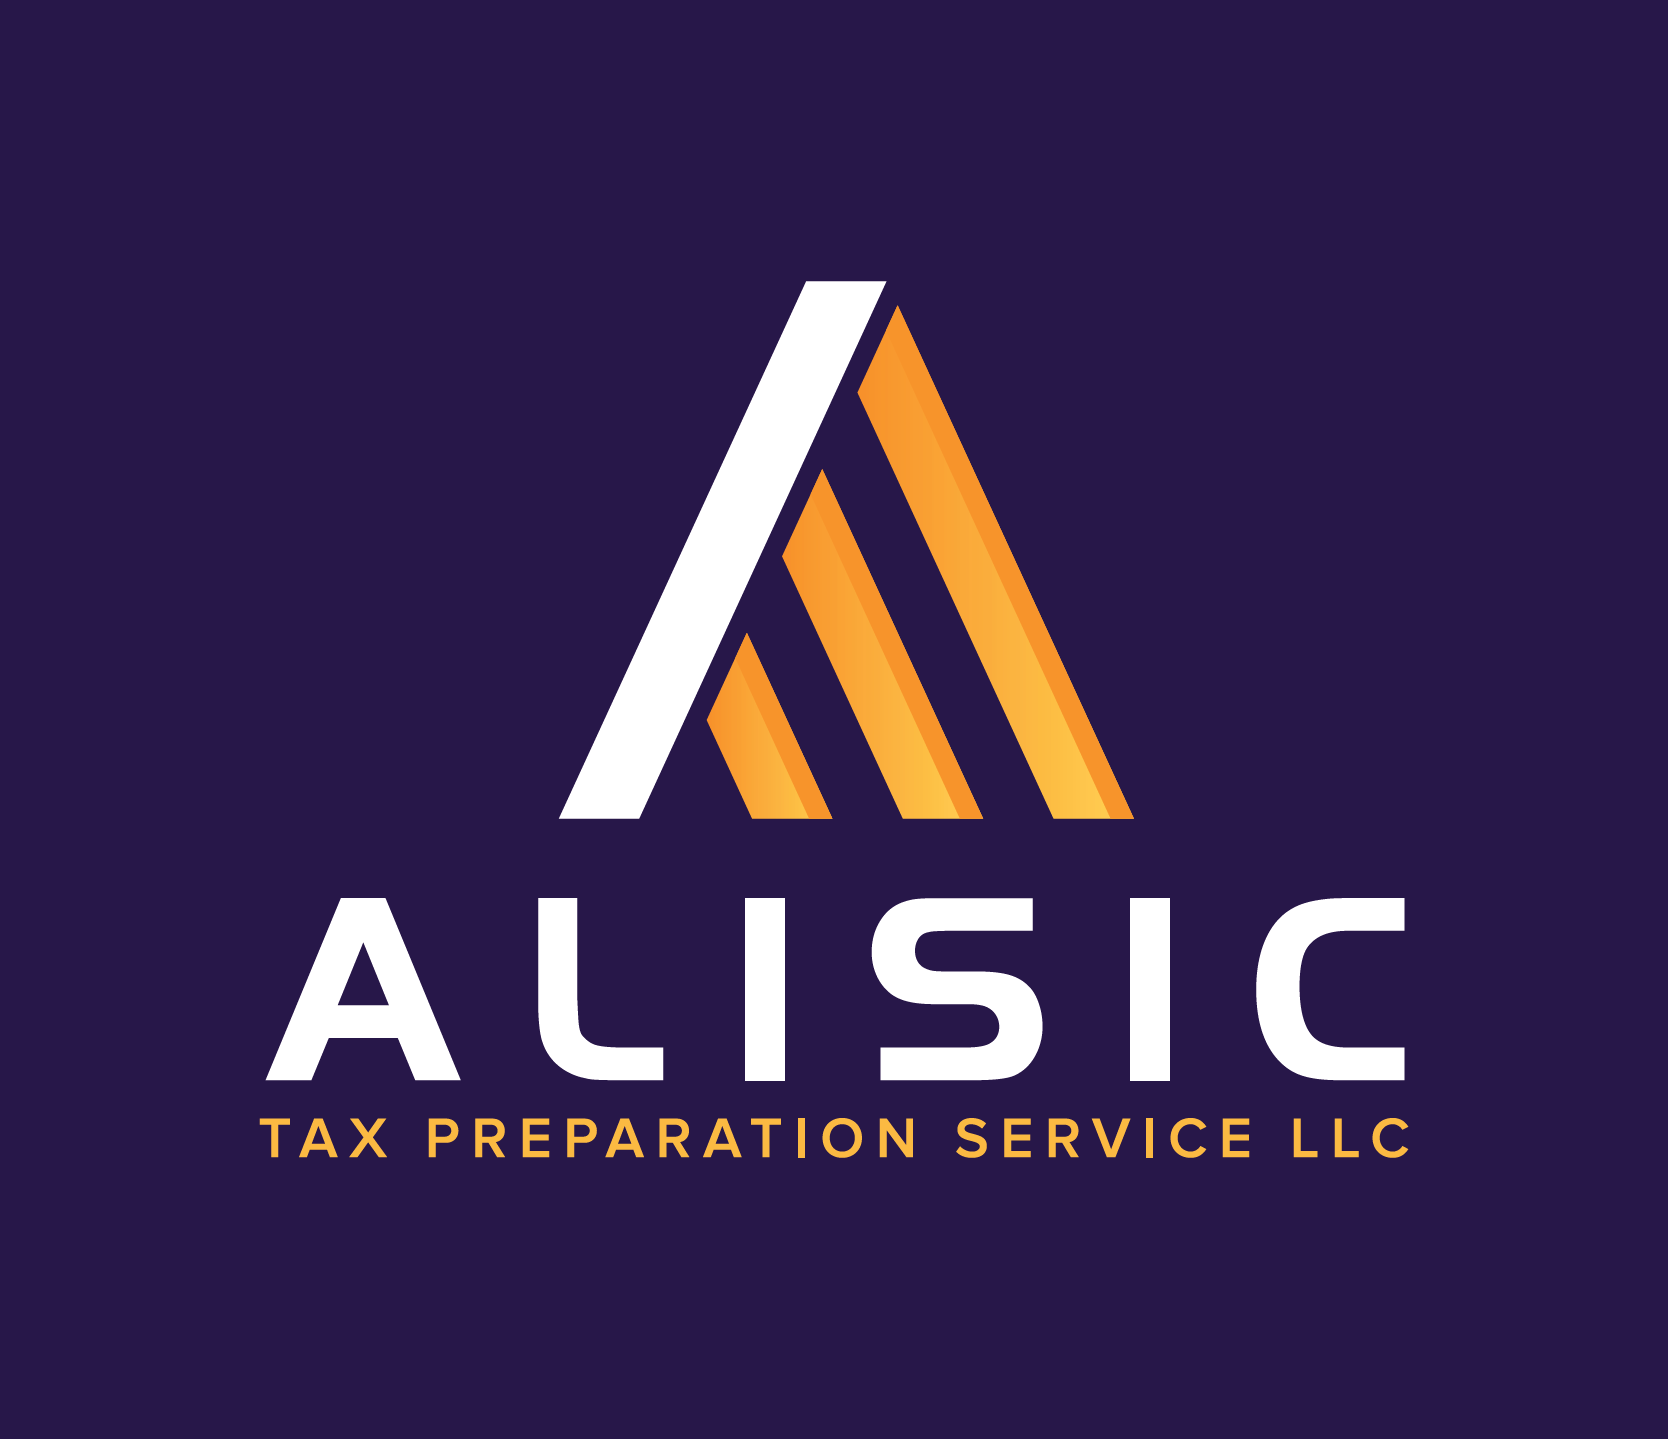 ALISIC TAX PREPARATION SERVICE LLC